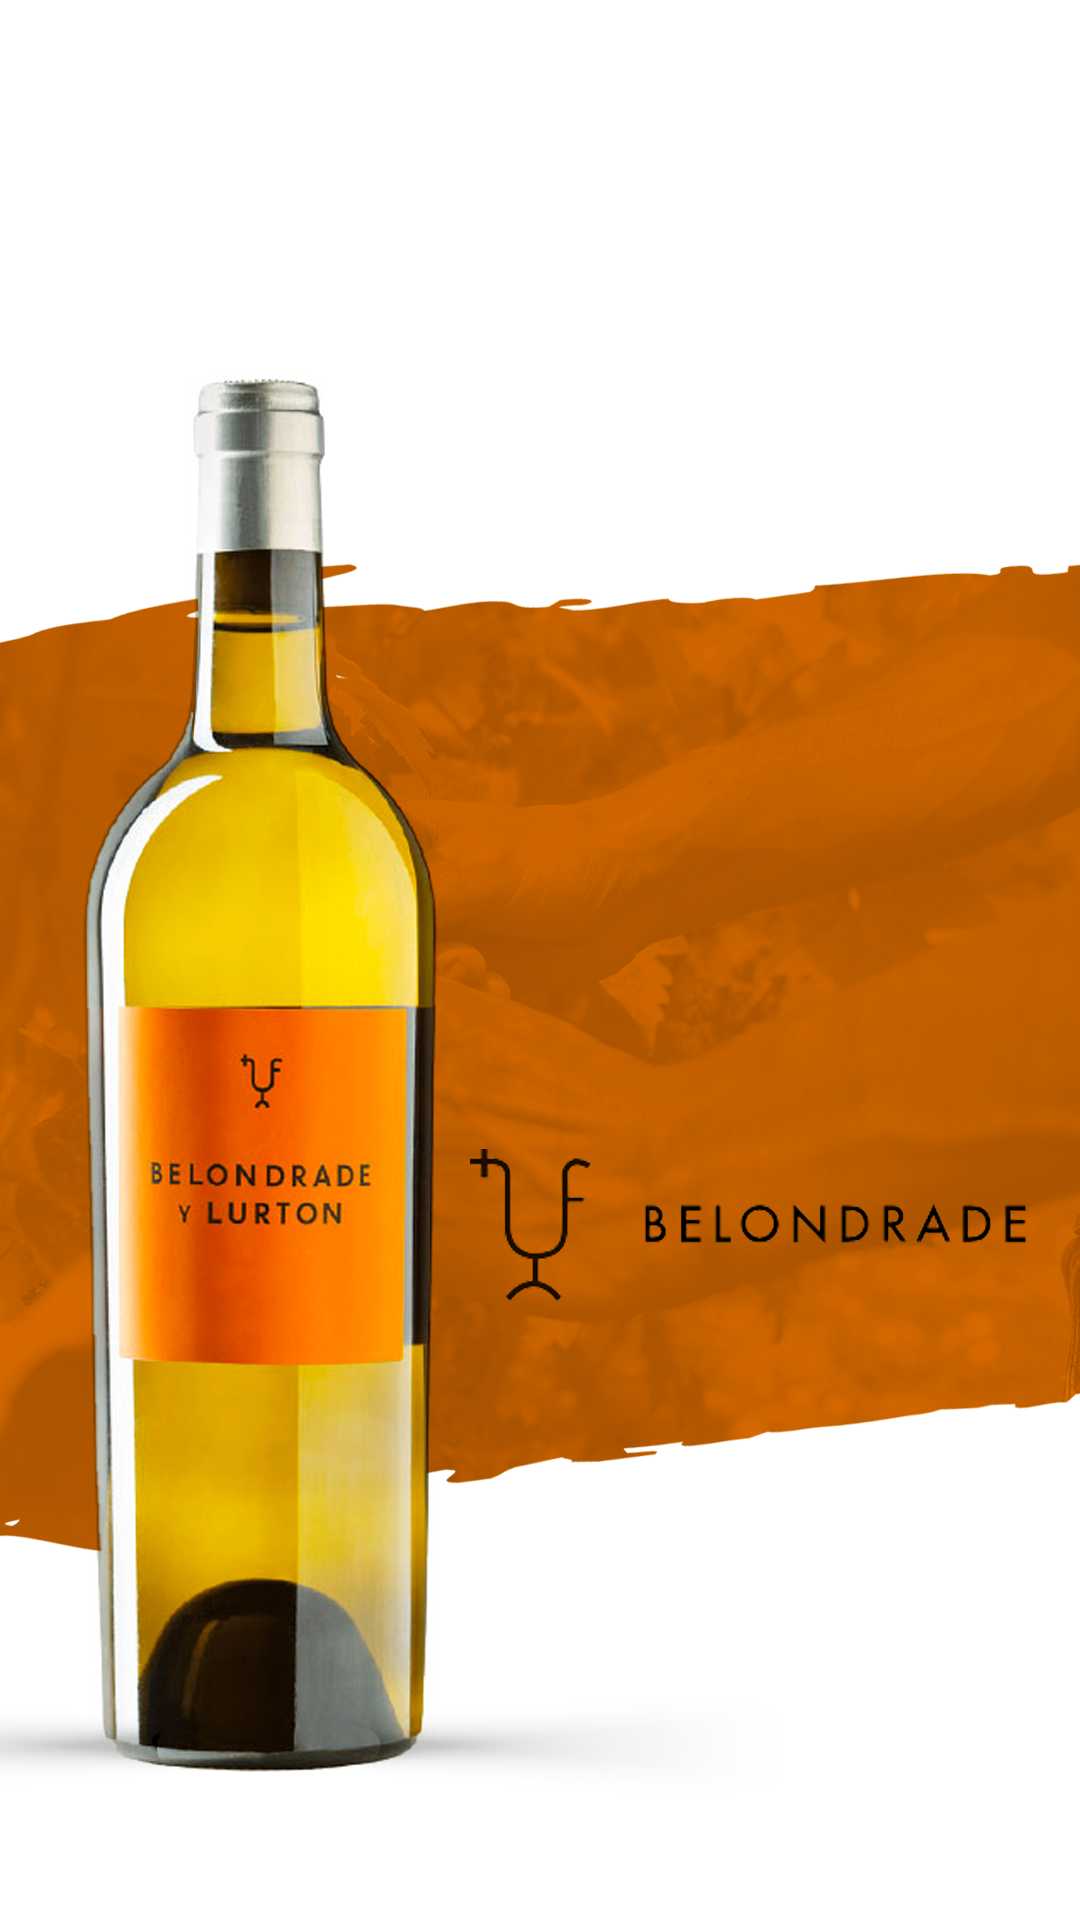 Icon of the Spanish wine world, Belondrade y Lurton arrives at Vinha